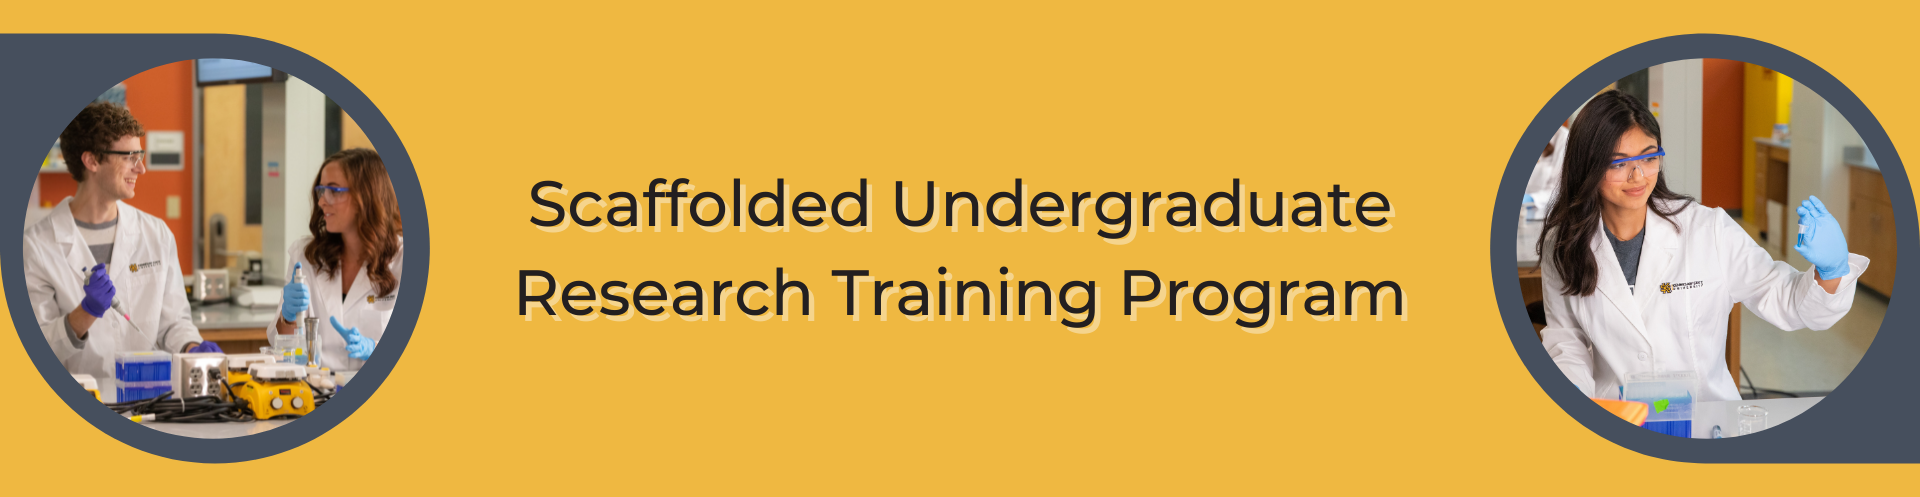 Scaffolded Undergraduate Research Training Program